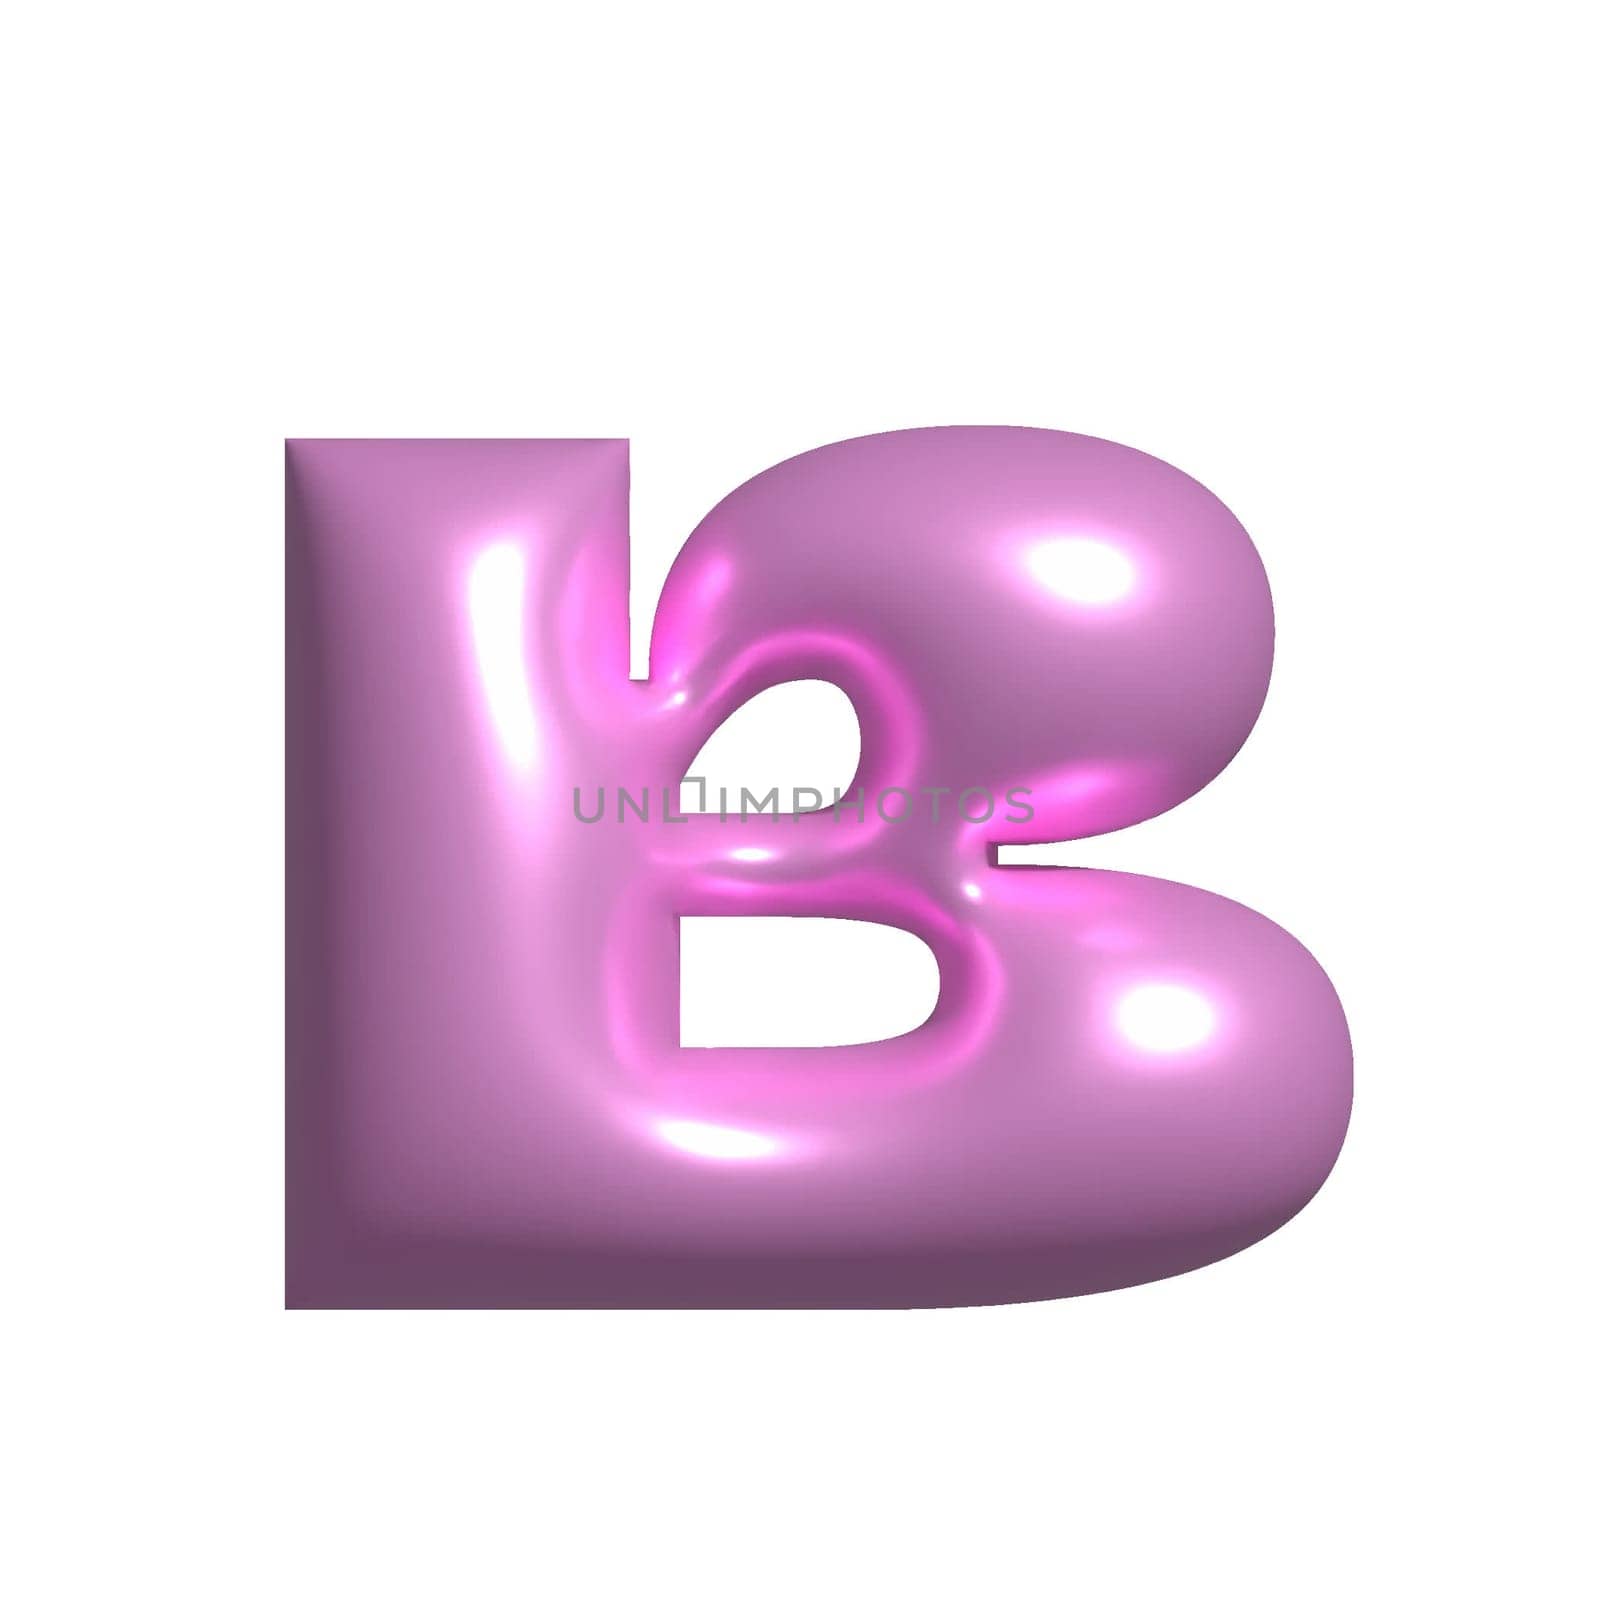 Pink shiny metal shiny reflective letter B 3D illustration